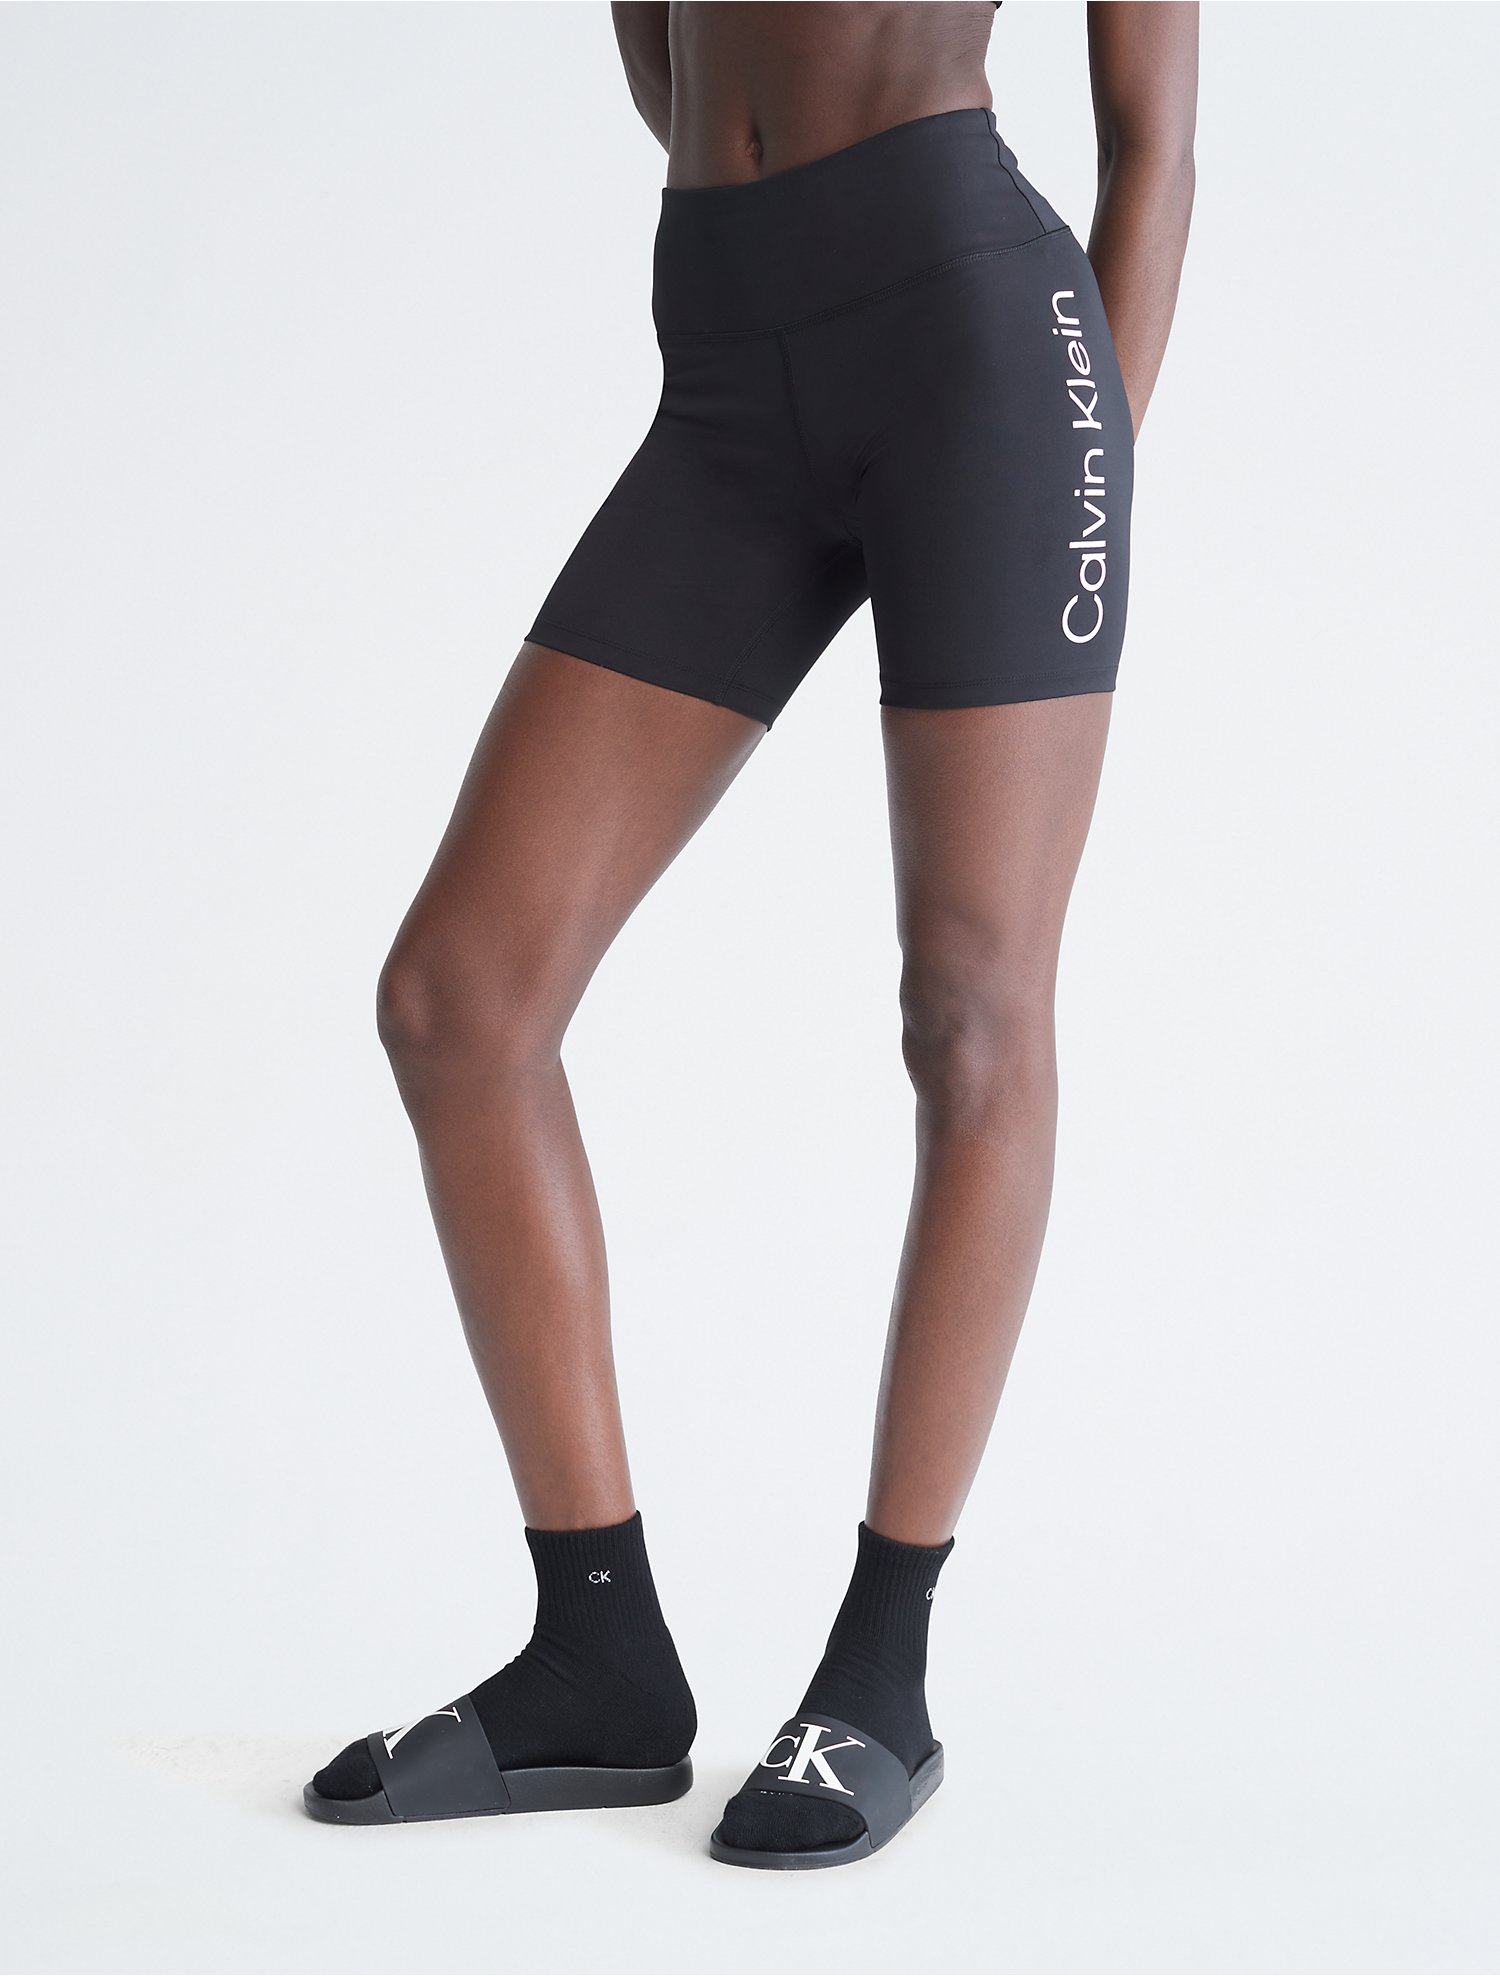 Performance Sleek High Waist Bike Shorts | Calvin Klein® USA